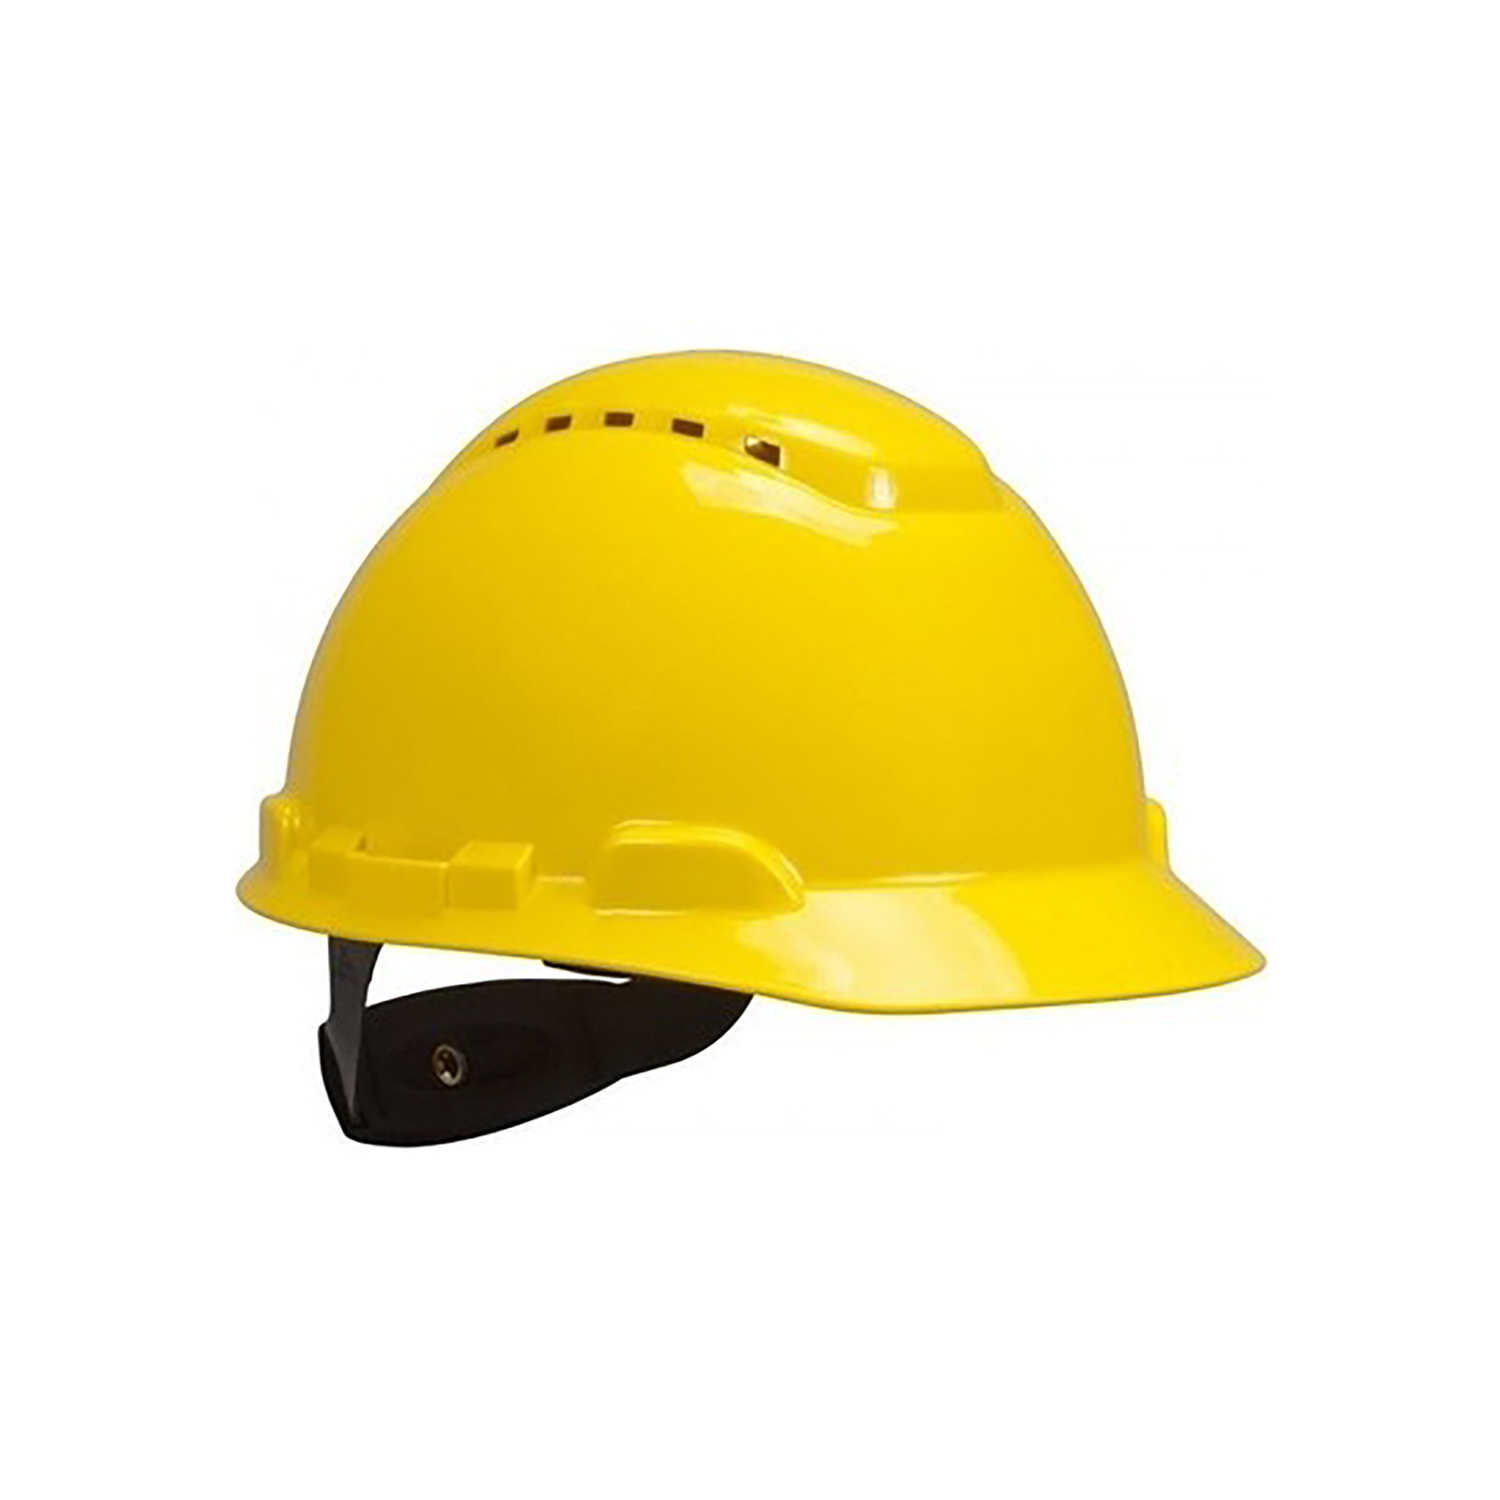 Ventilated Safety Helmet